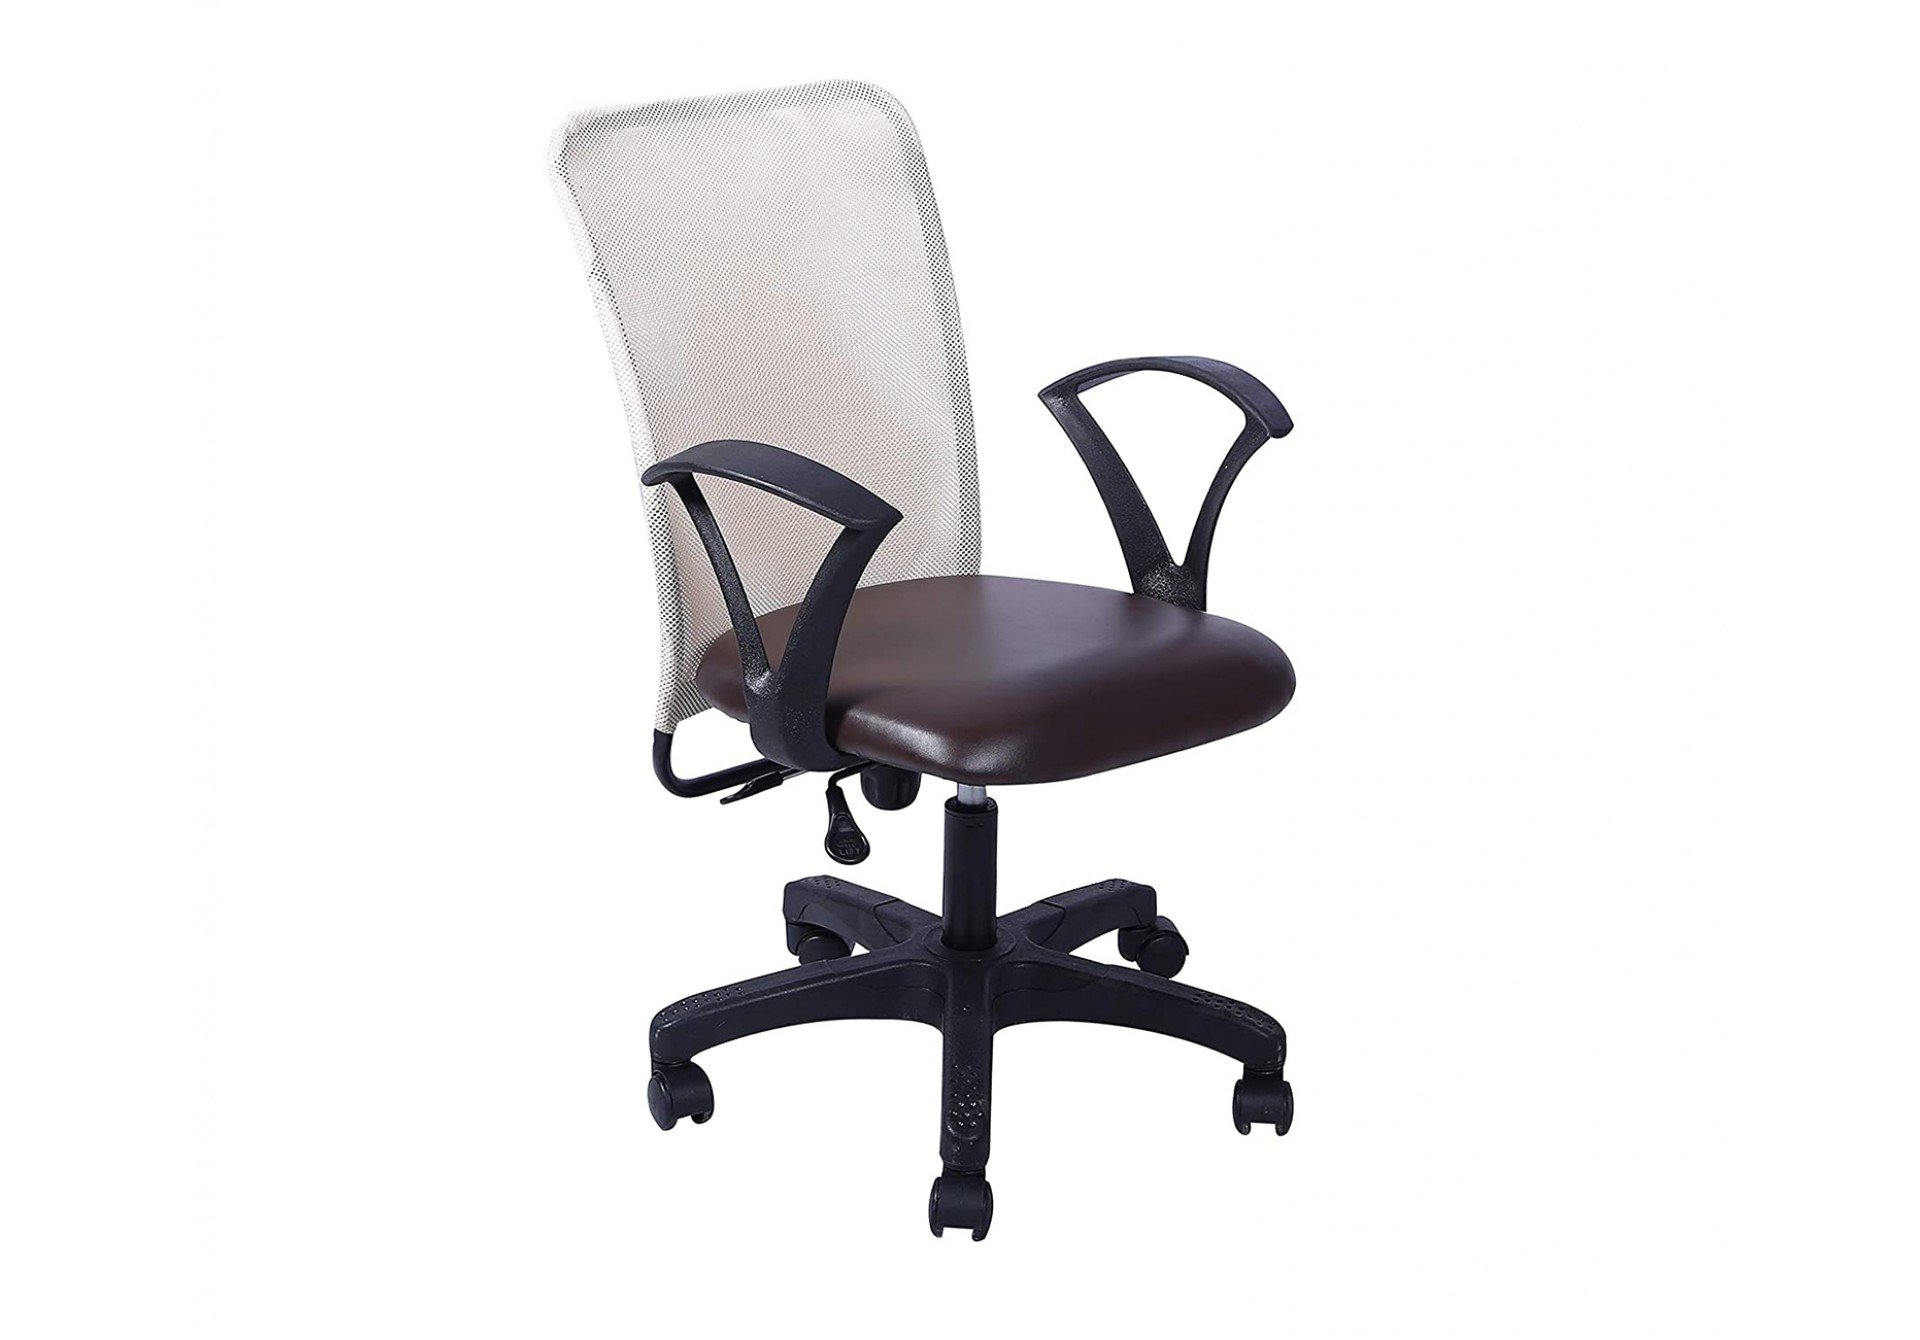 Petrik Office Chair 